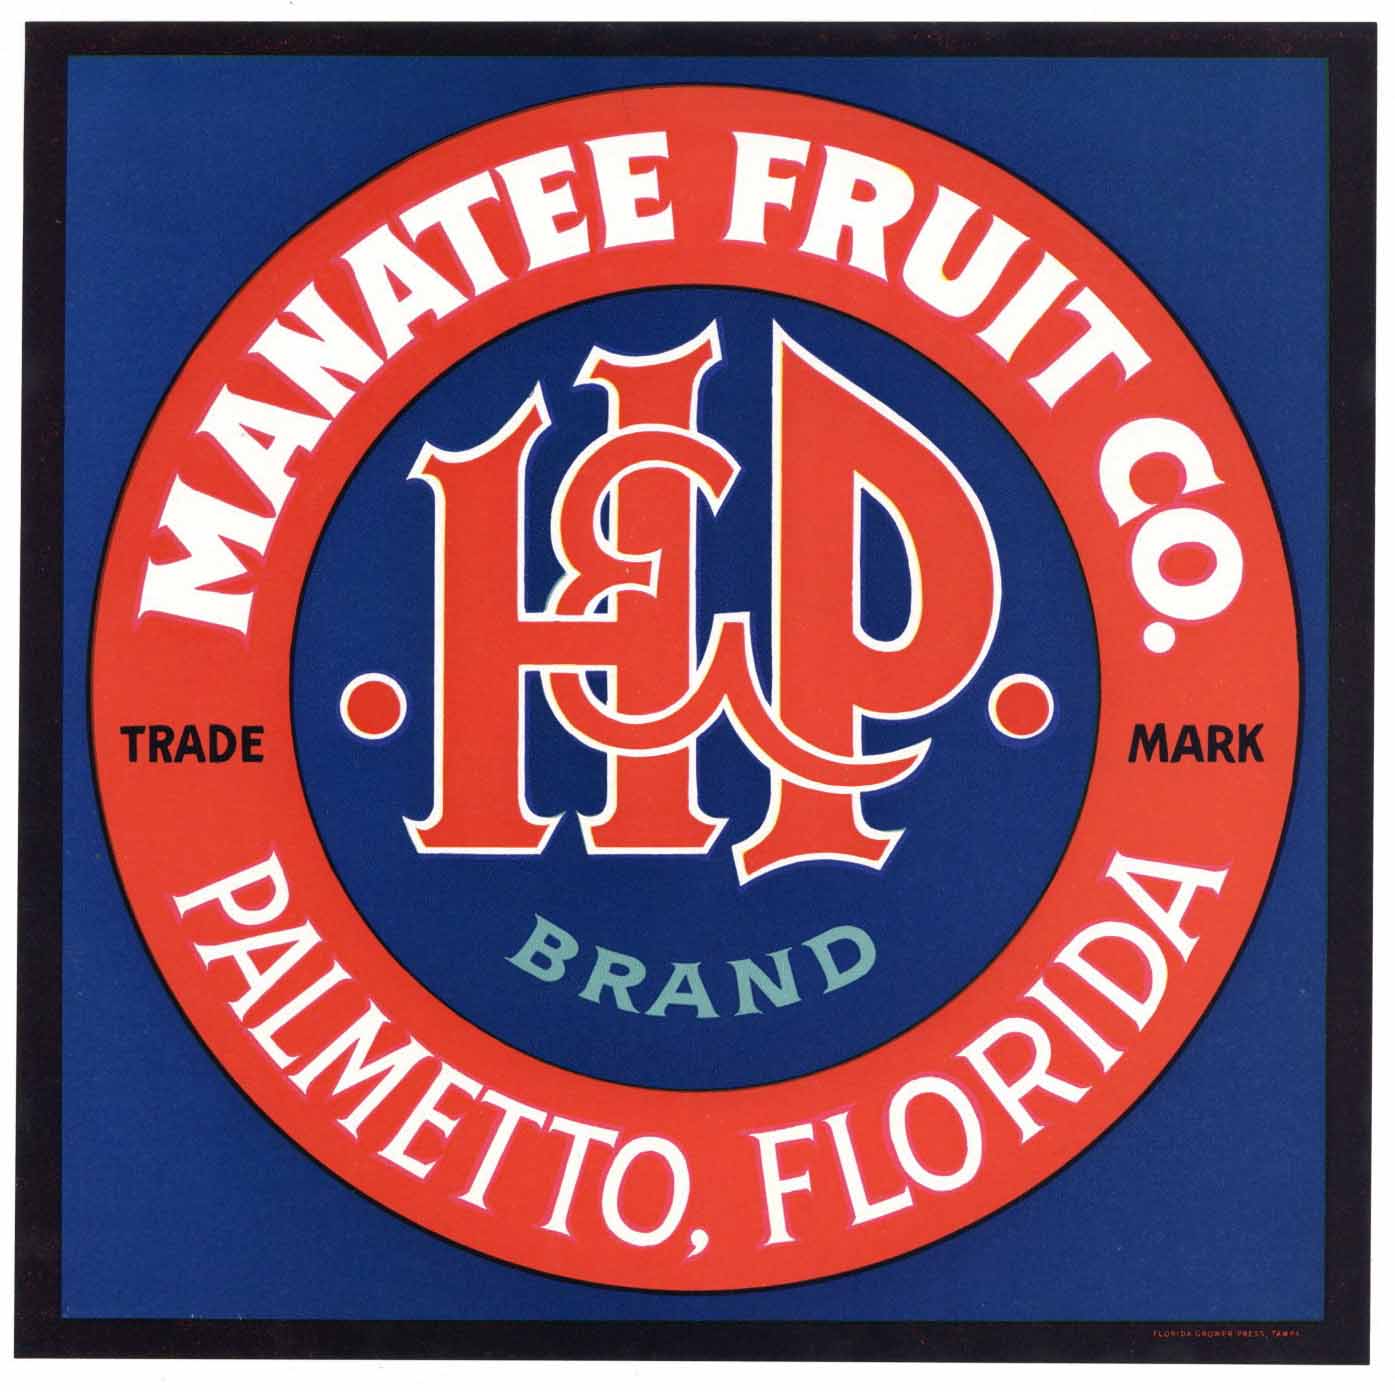 H & P Brand Vintage Palmetto Florida Citrus Crate Label